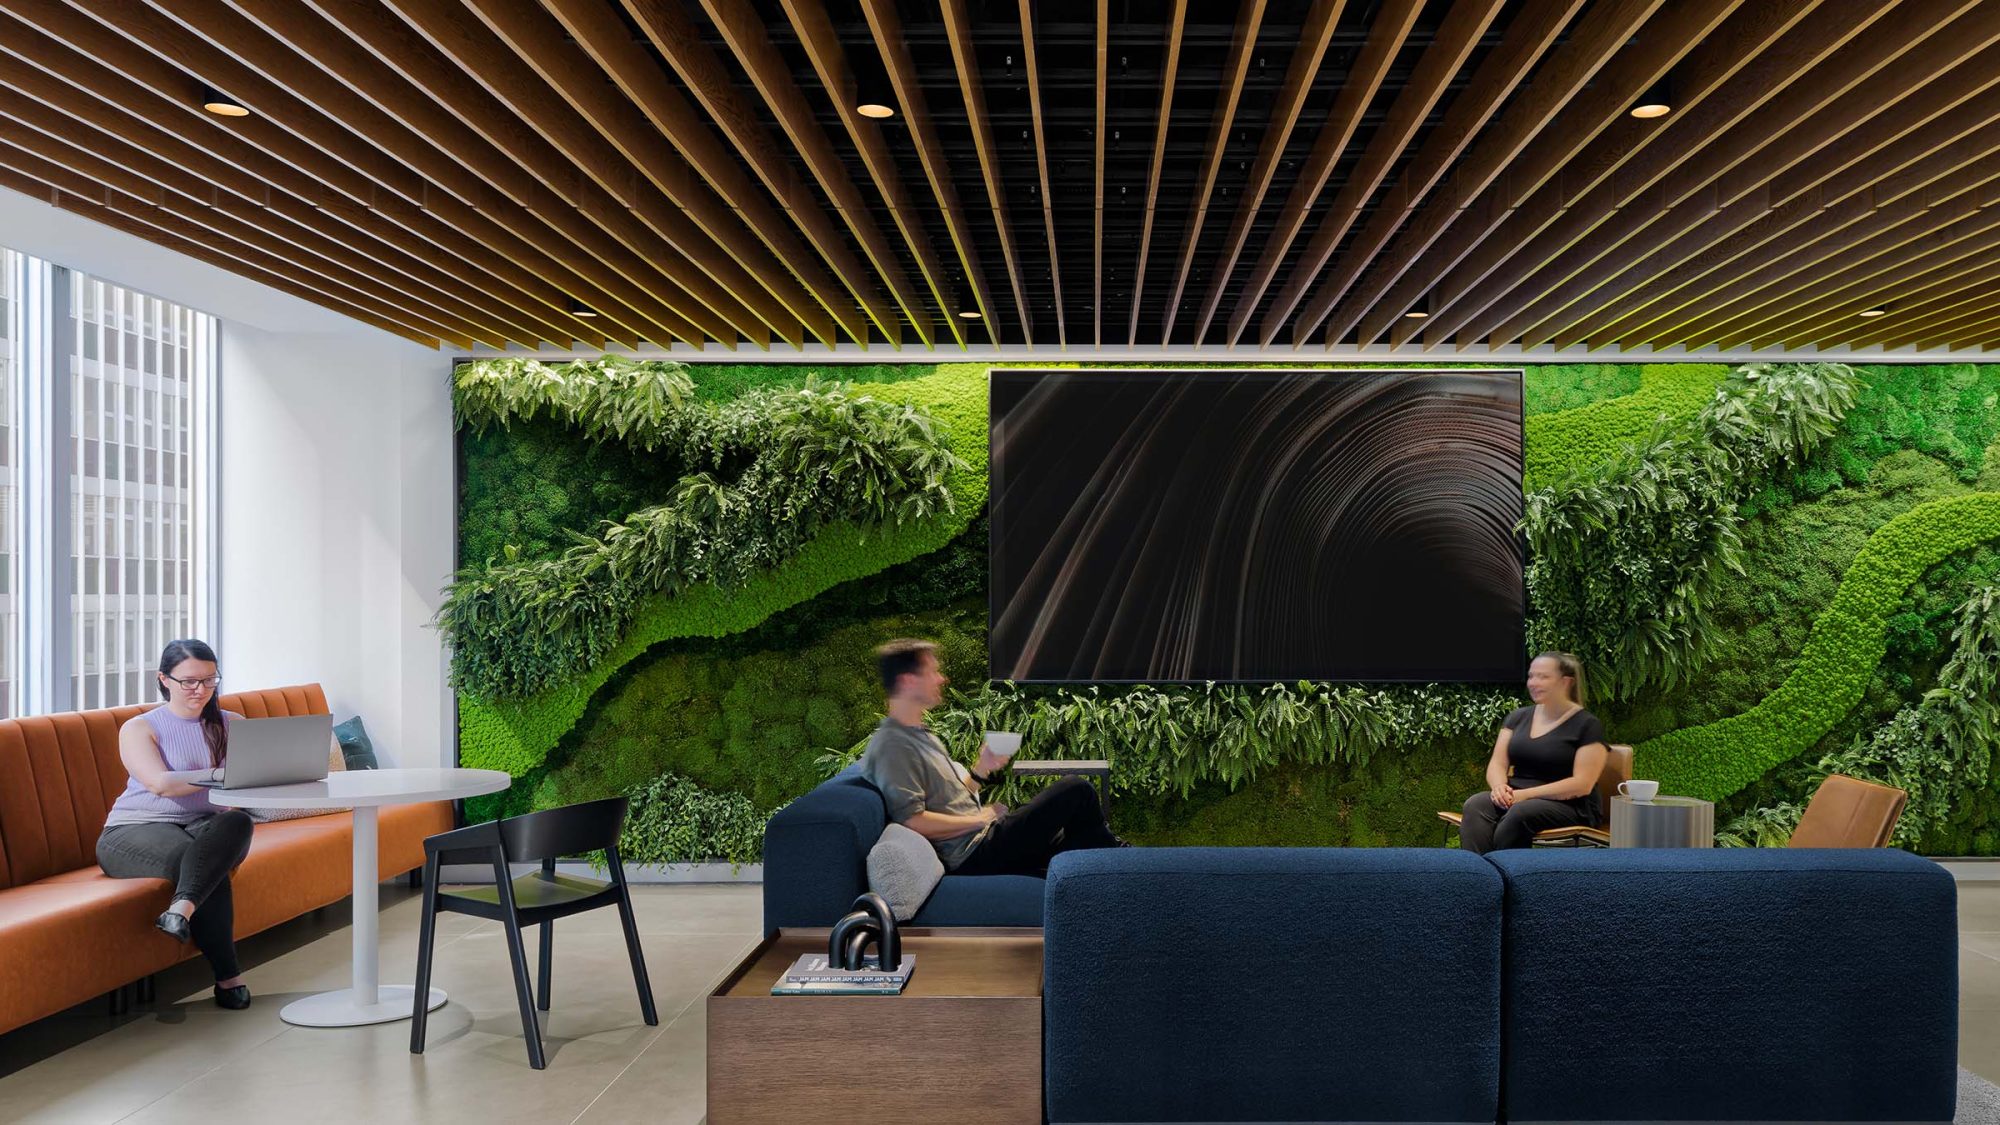 Work environment design featuring a living wall.